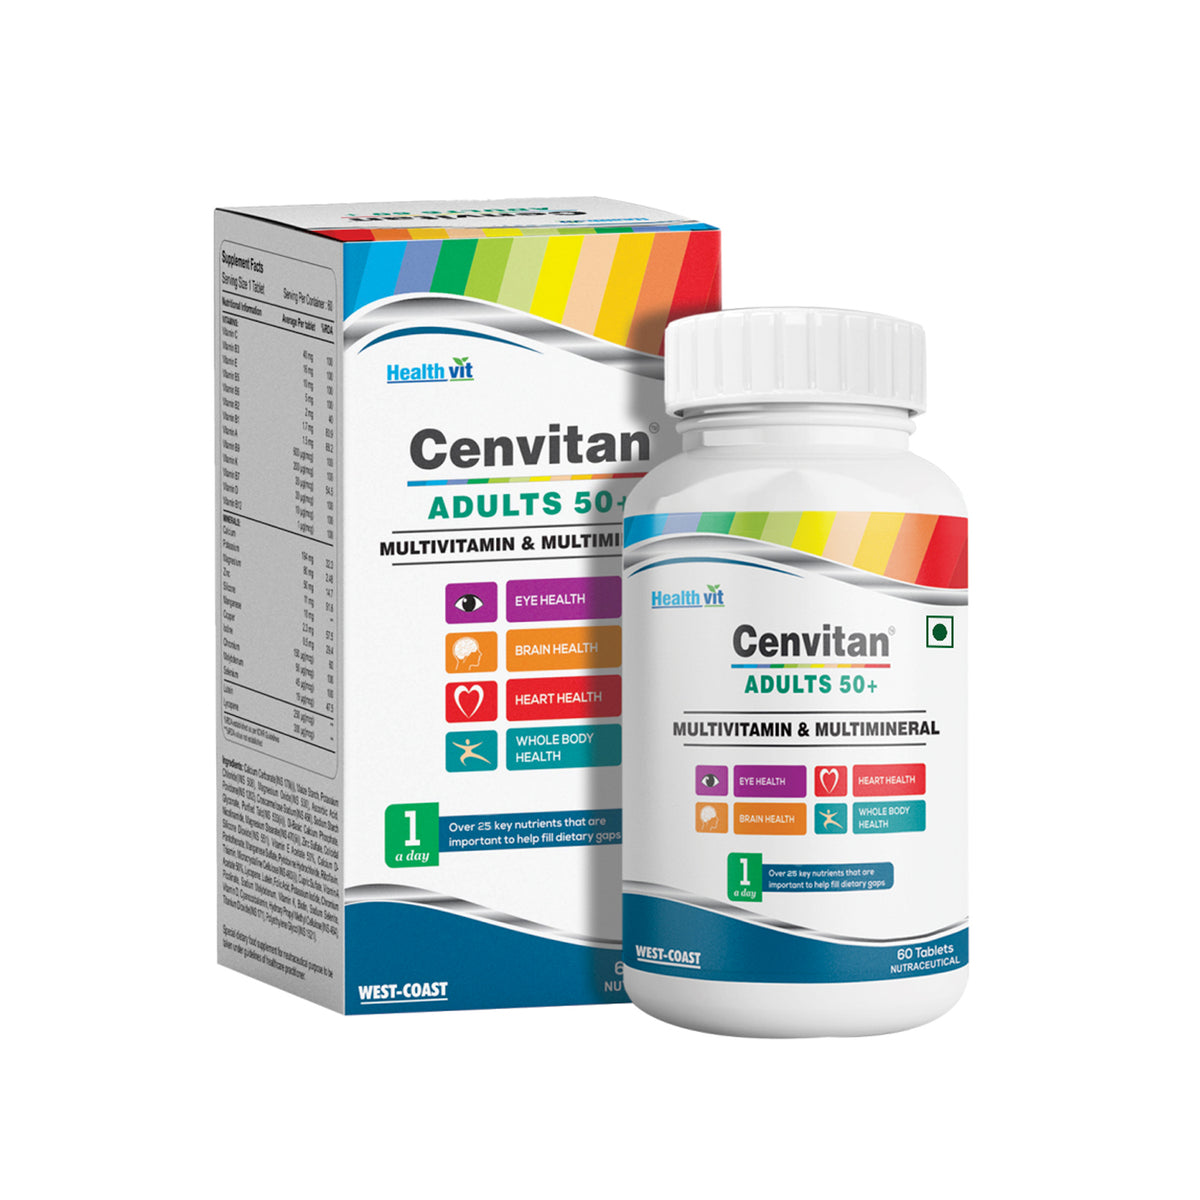 Healthvit Cenvitan Adults 50 + (Multivitamin & Multimineral)